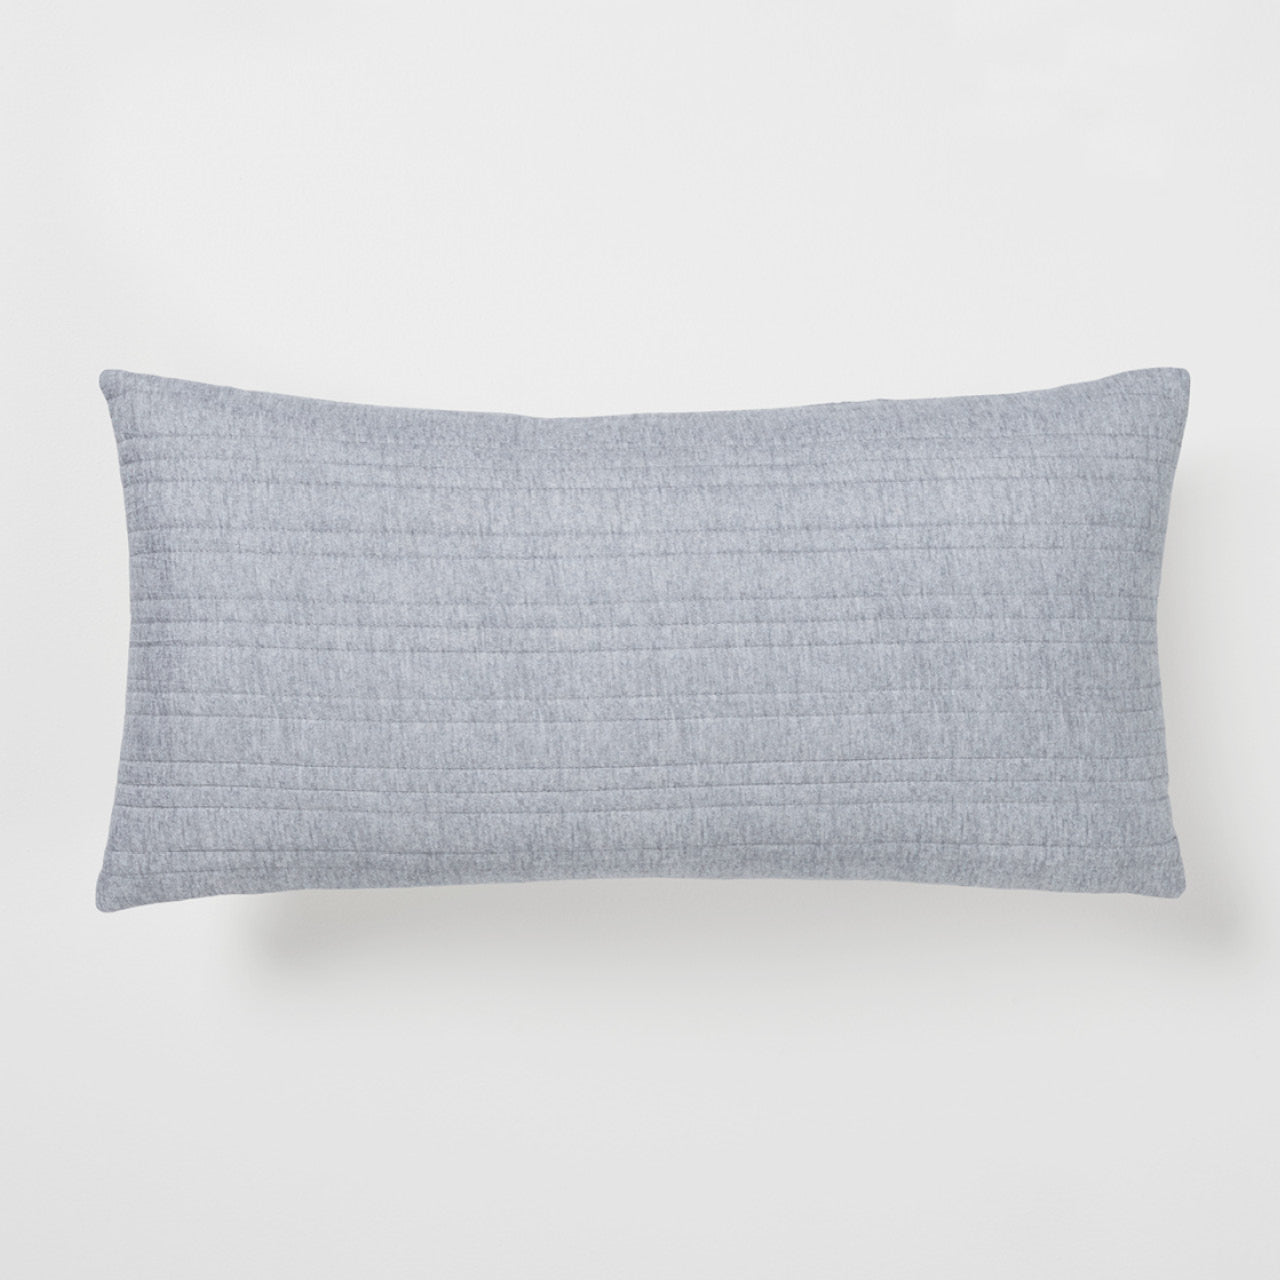 Taya Grey Marle Cushion Cover on a white background